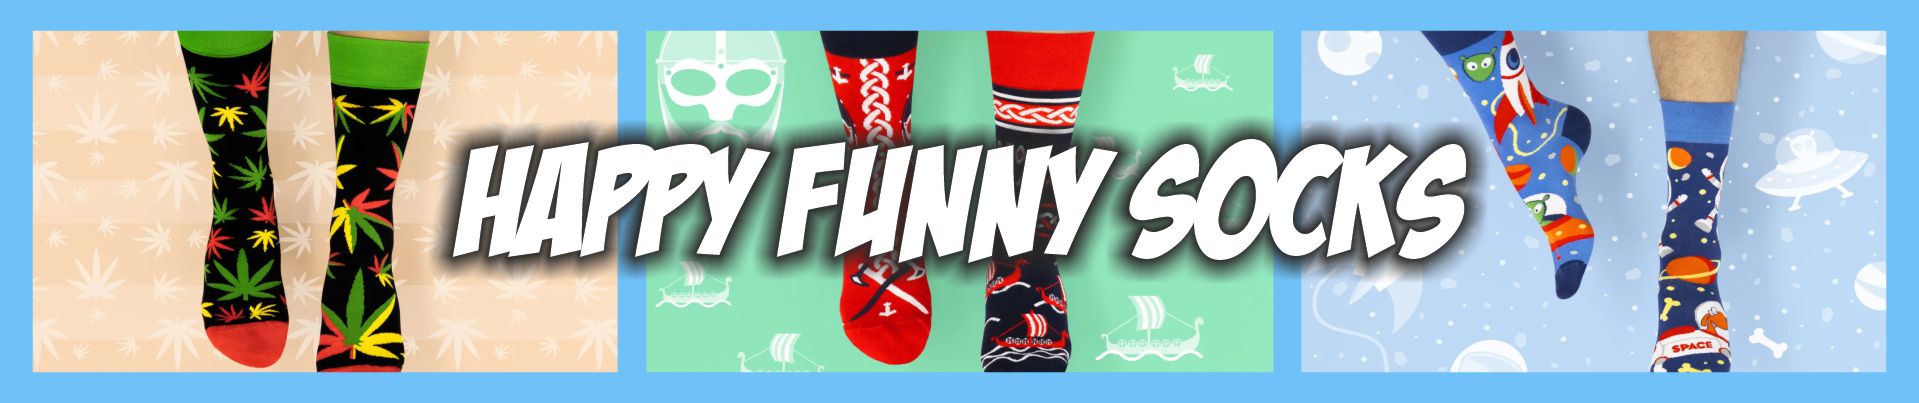 tkt happy funny socks